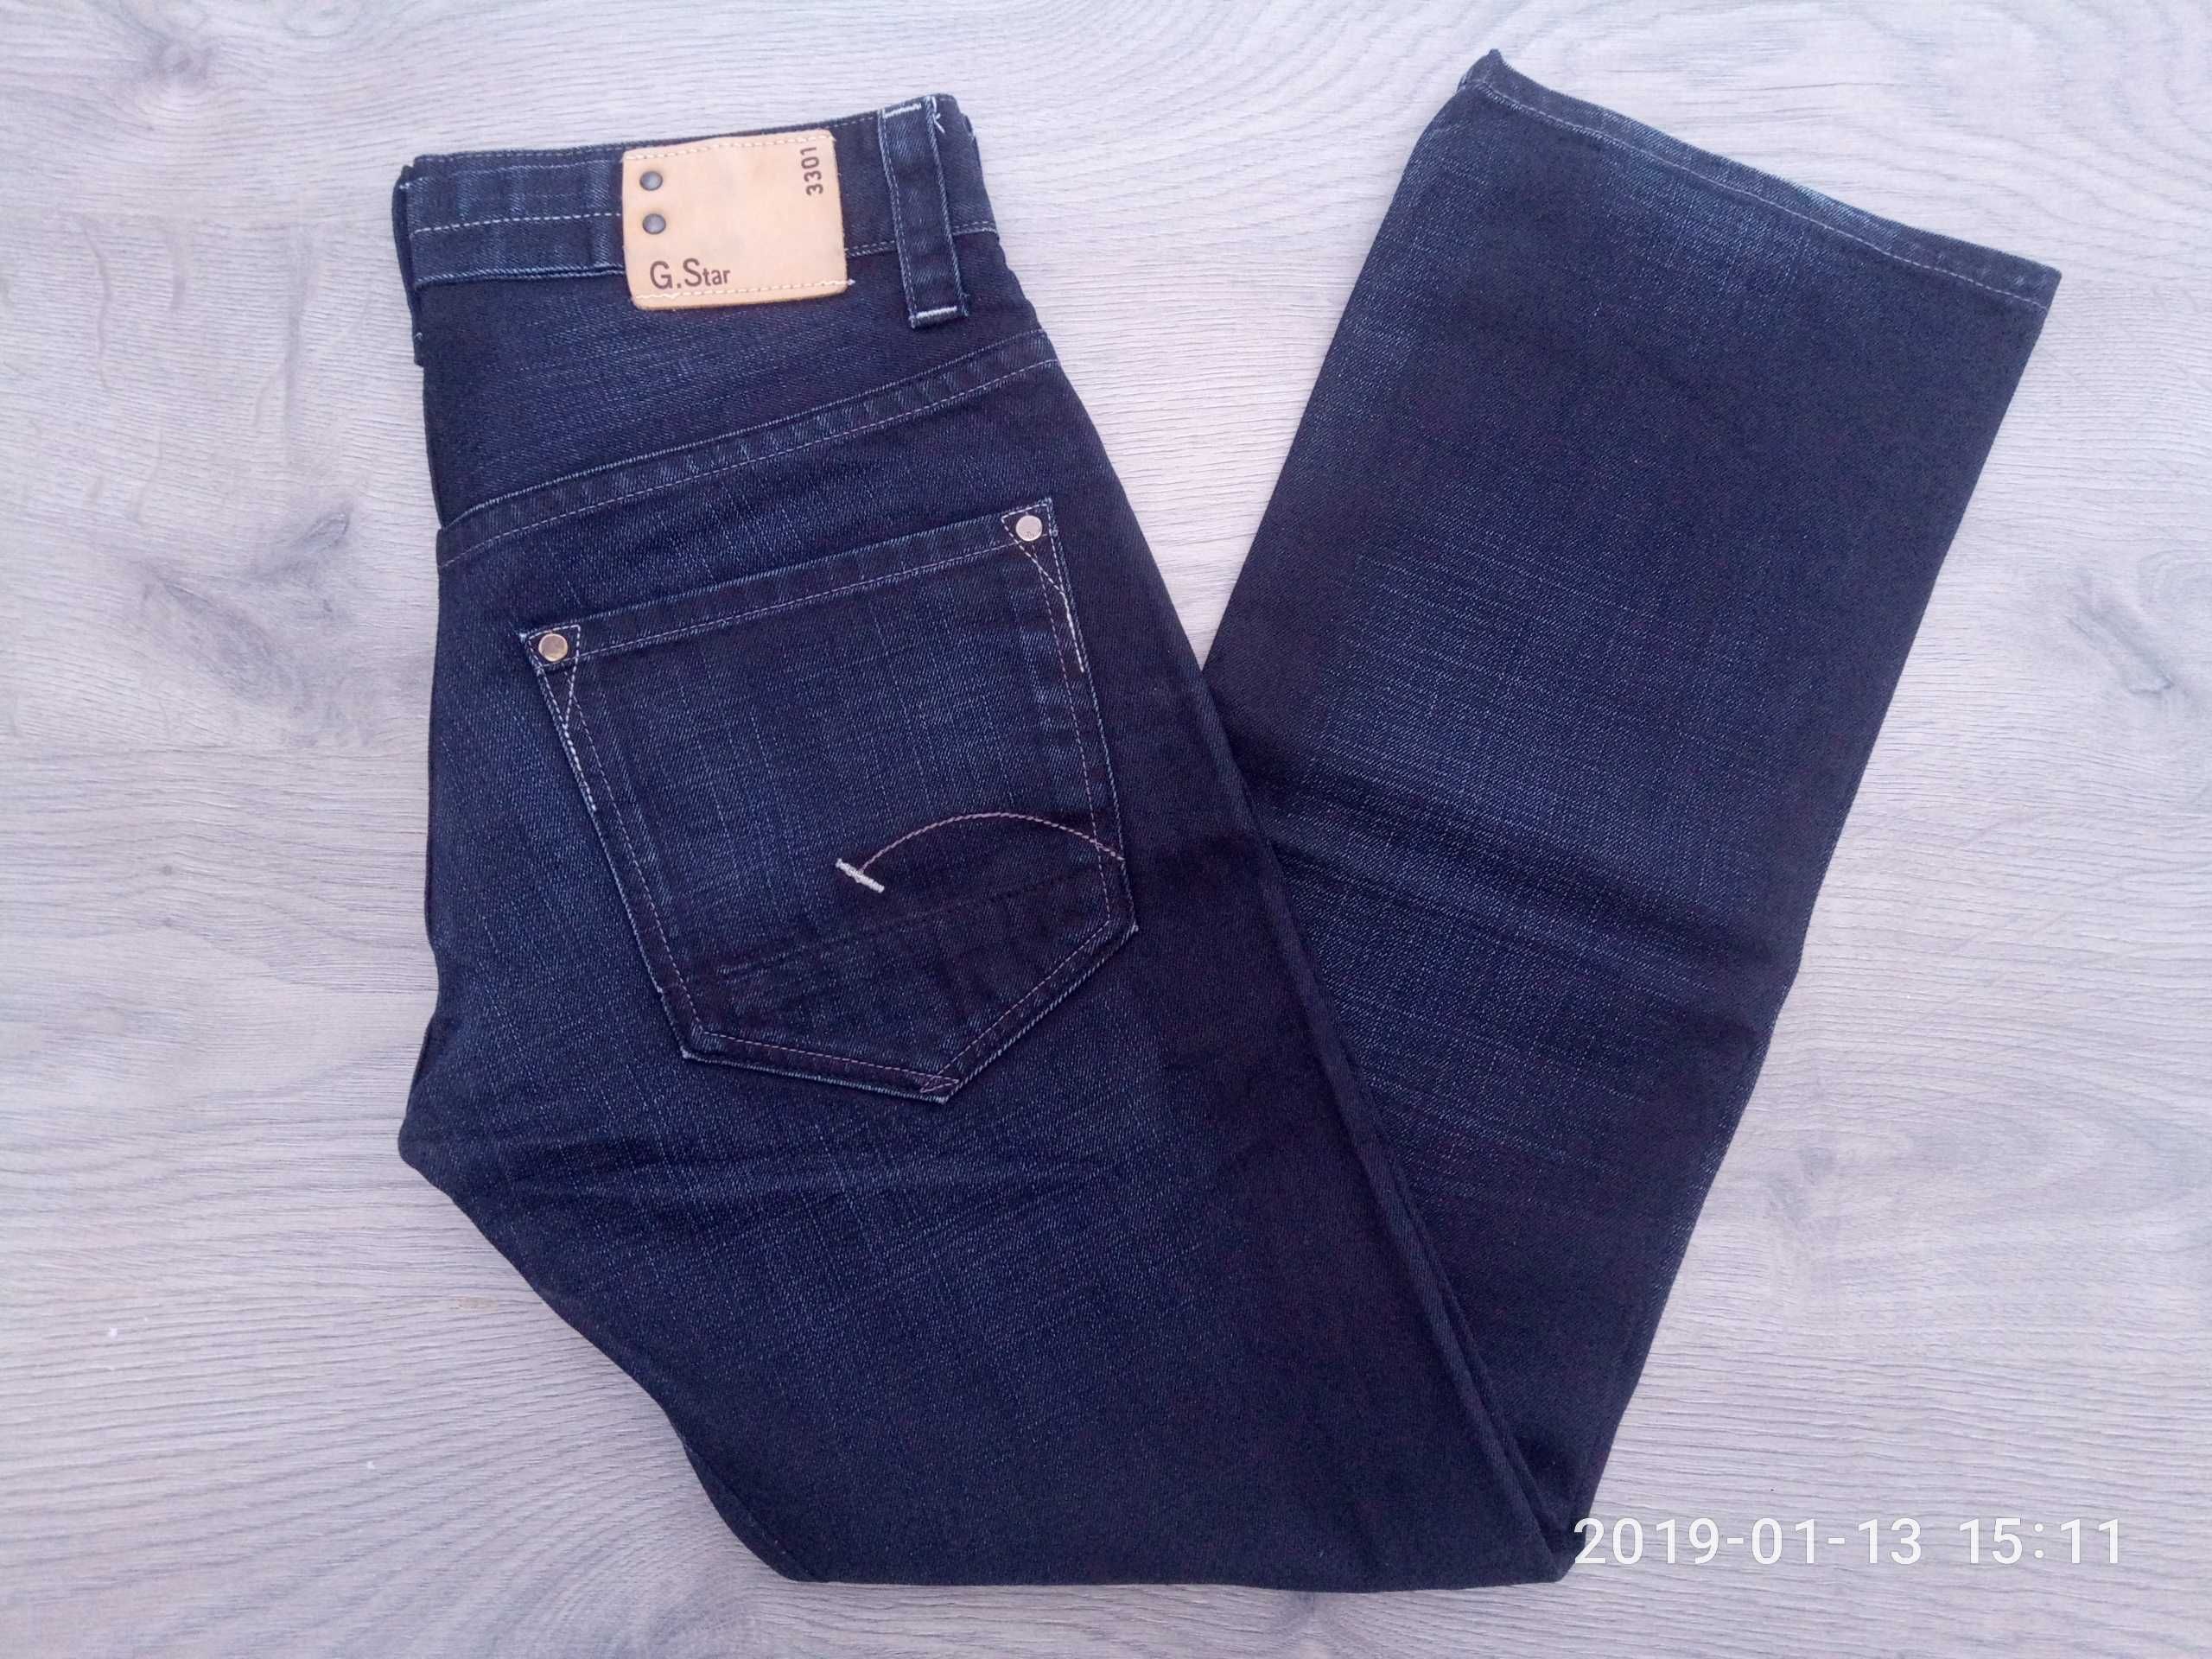 G-Star 3301 size W32 L32 джинсы мужские джи стар, джинси чоловічі